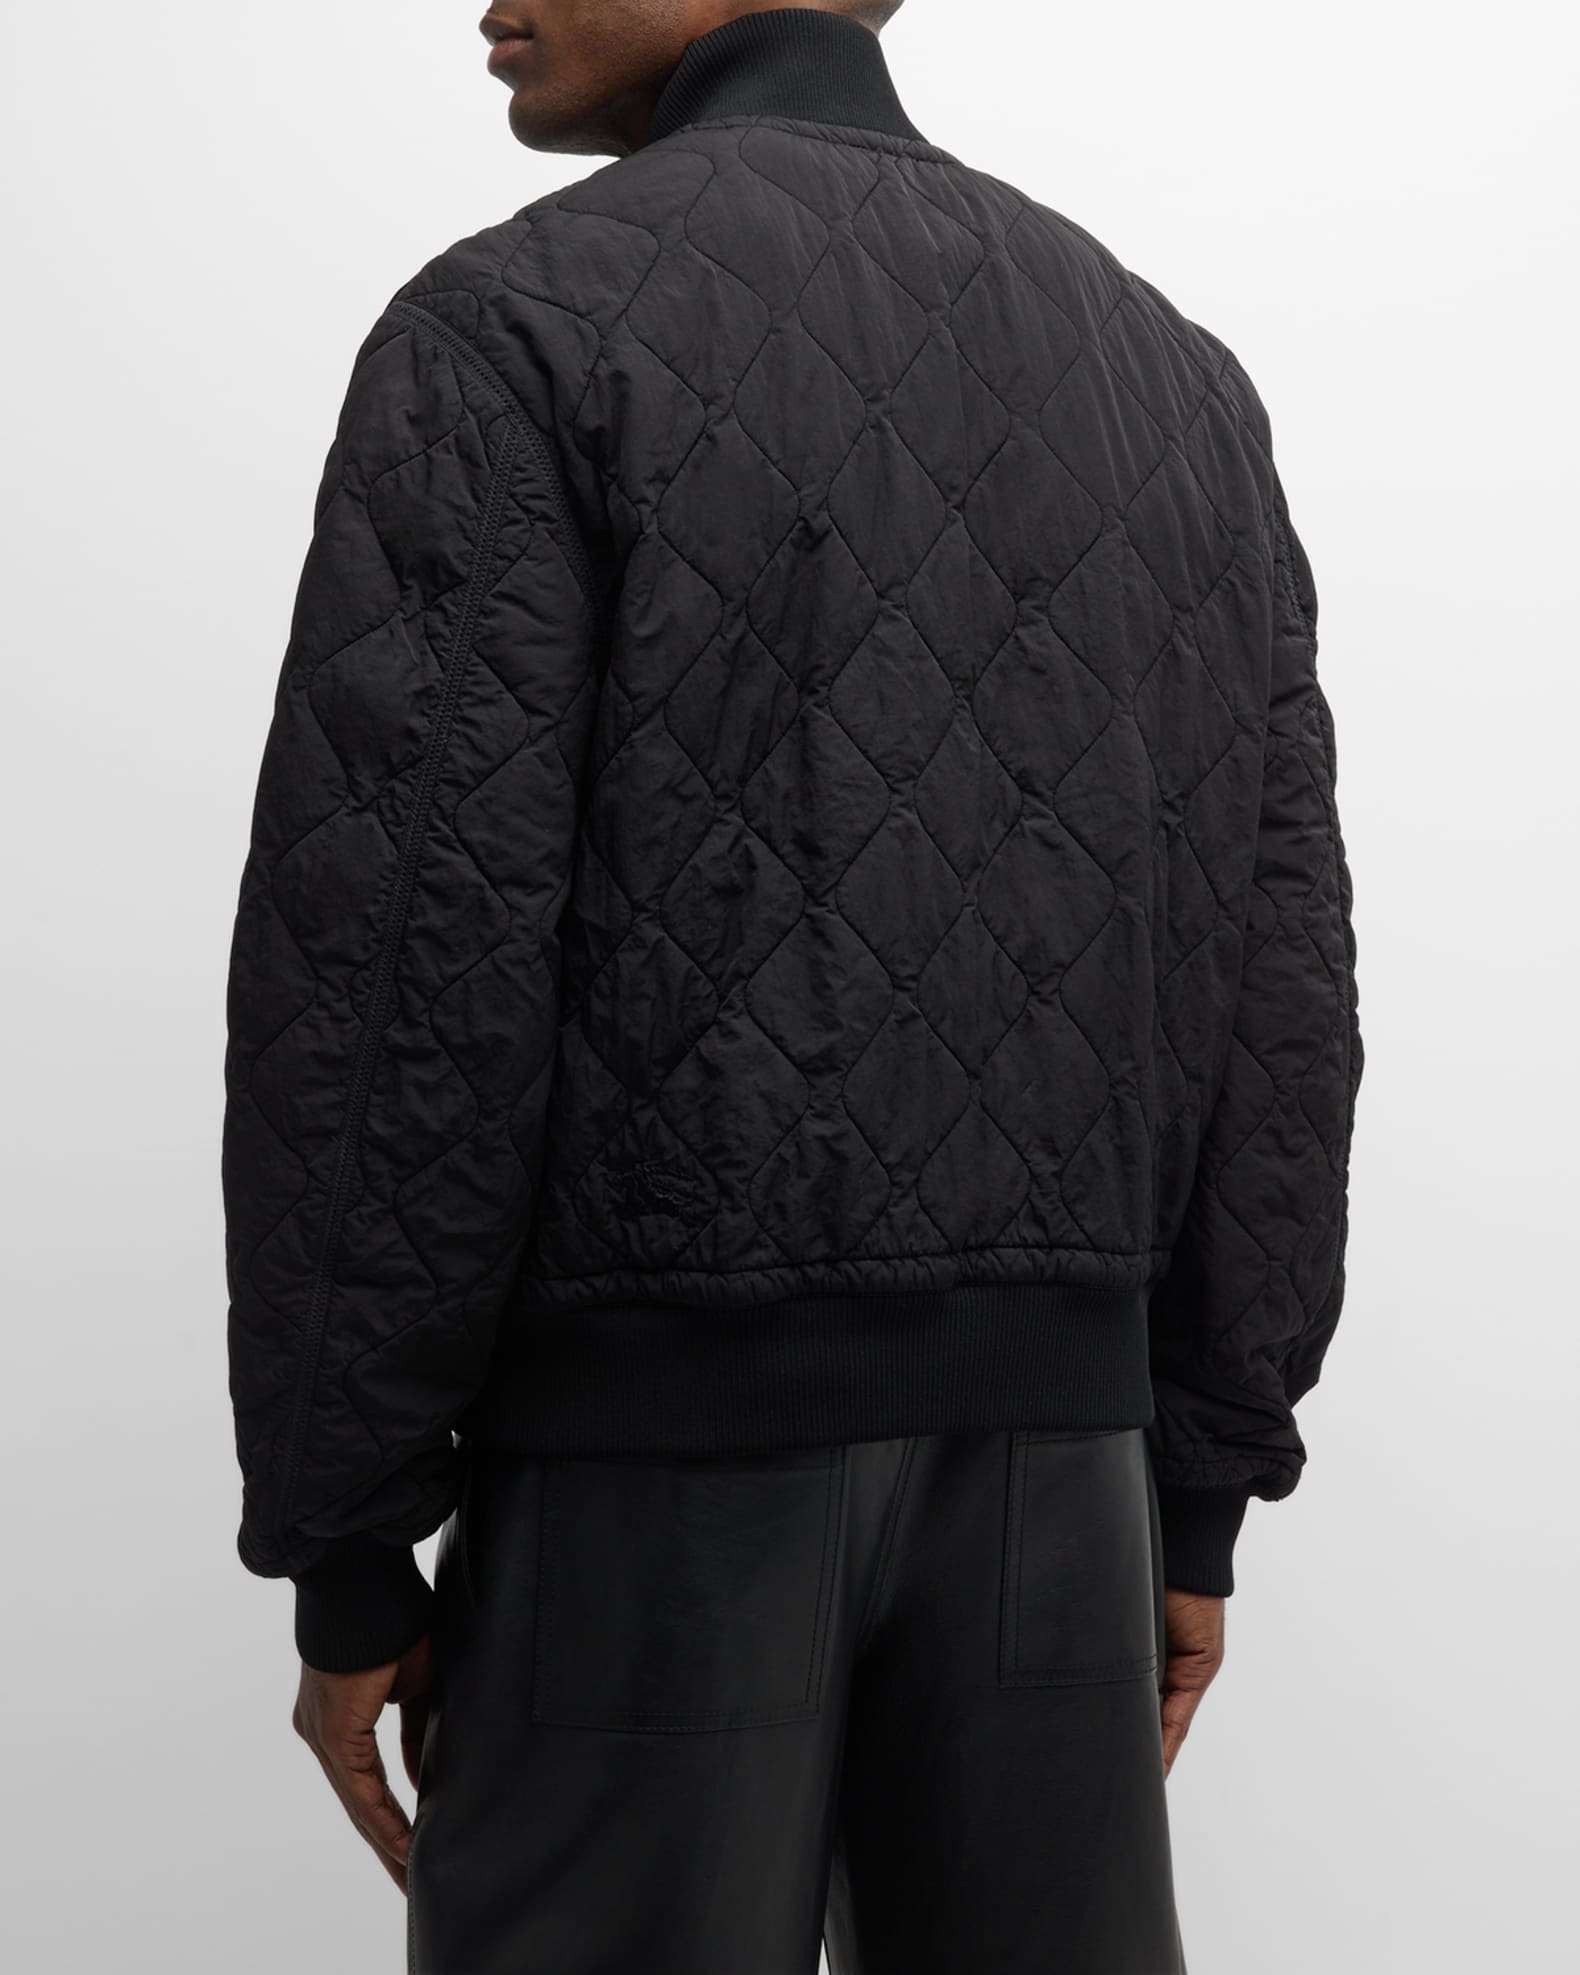 Burberry Men's Quilted Crinkle Nylon Bomber Jacket | Neiman Marcus